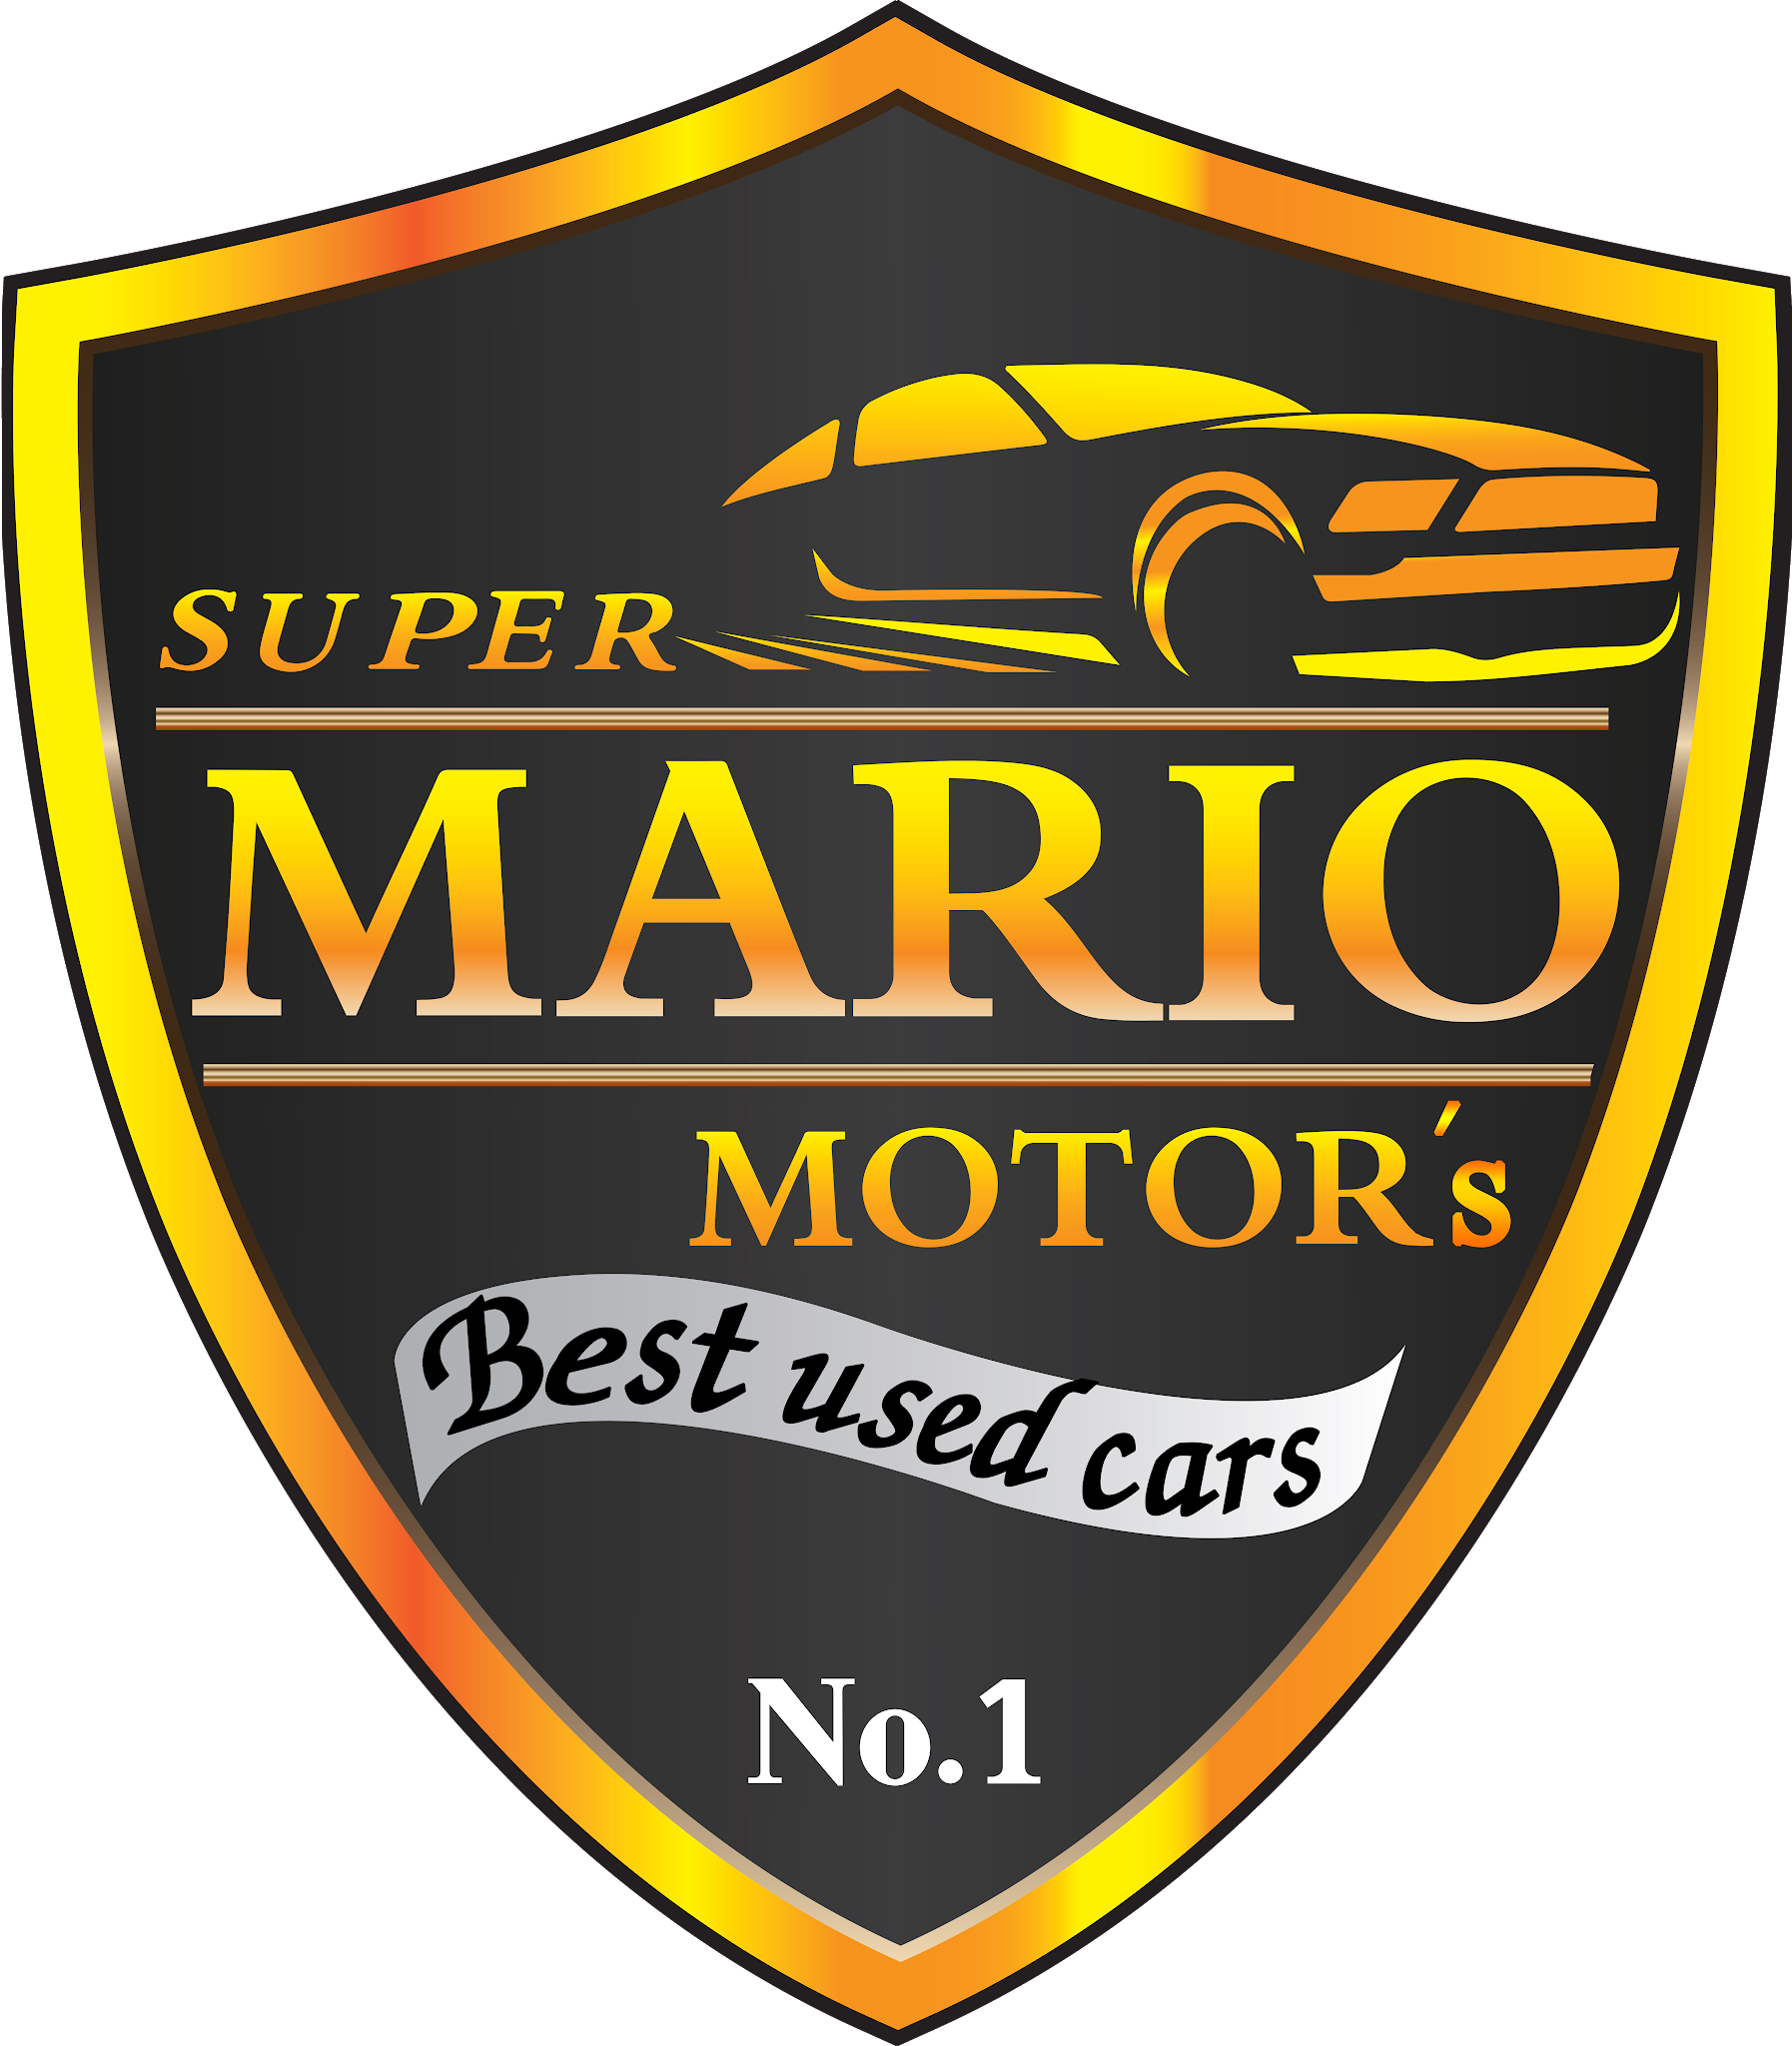 Mariomotor’sรถสวยลำดับที่ 1